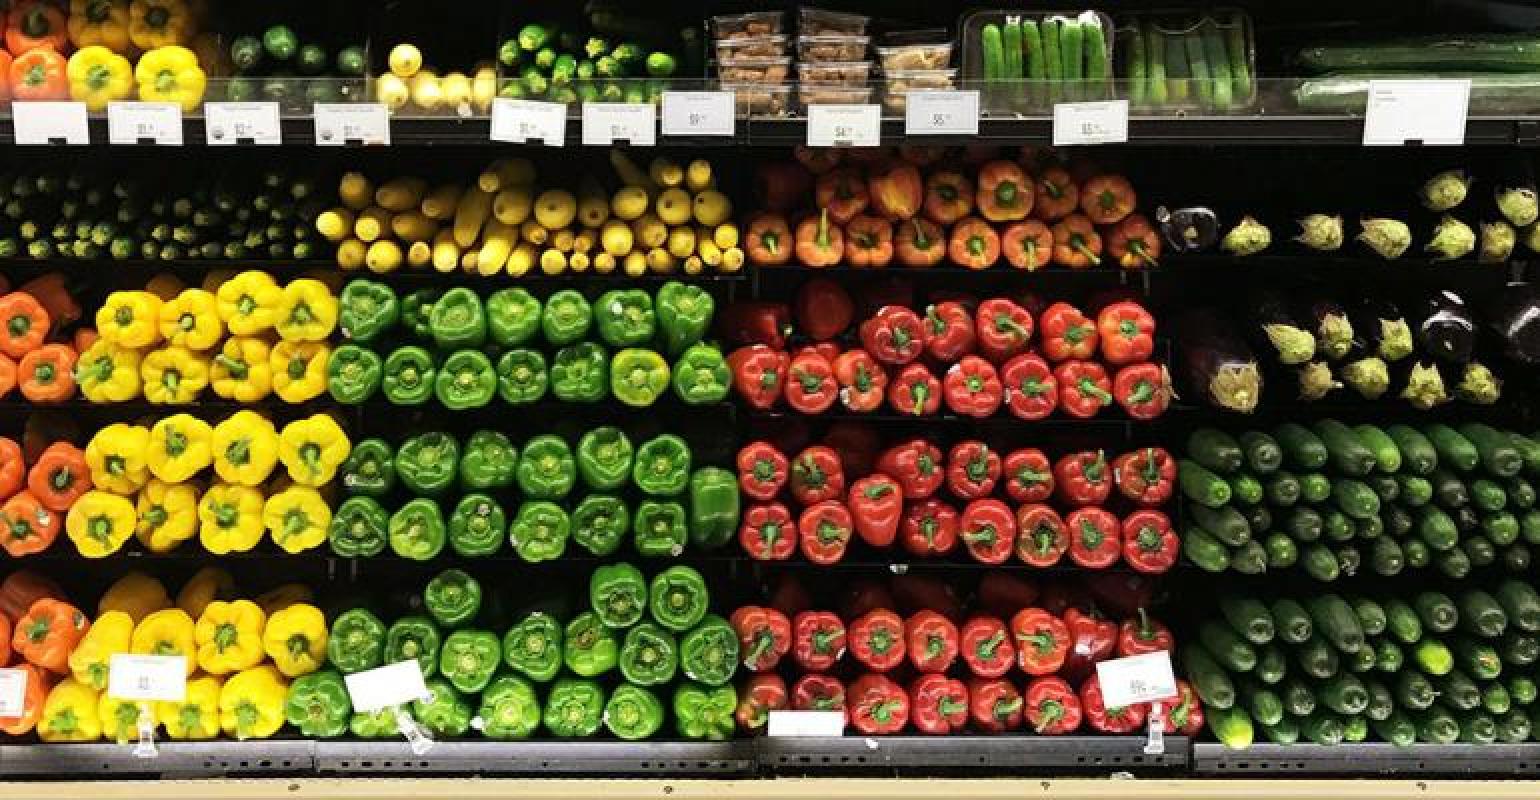 https://www.supermarketnews.com/sites/supermarketnews.com/files/styles/article_featured_retina/public/vegetables-category-guide_0.jpg?itok=a_aWACSO